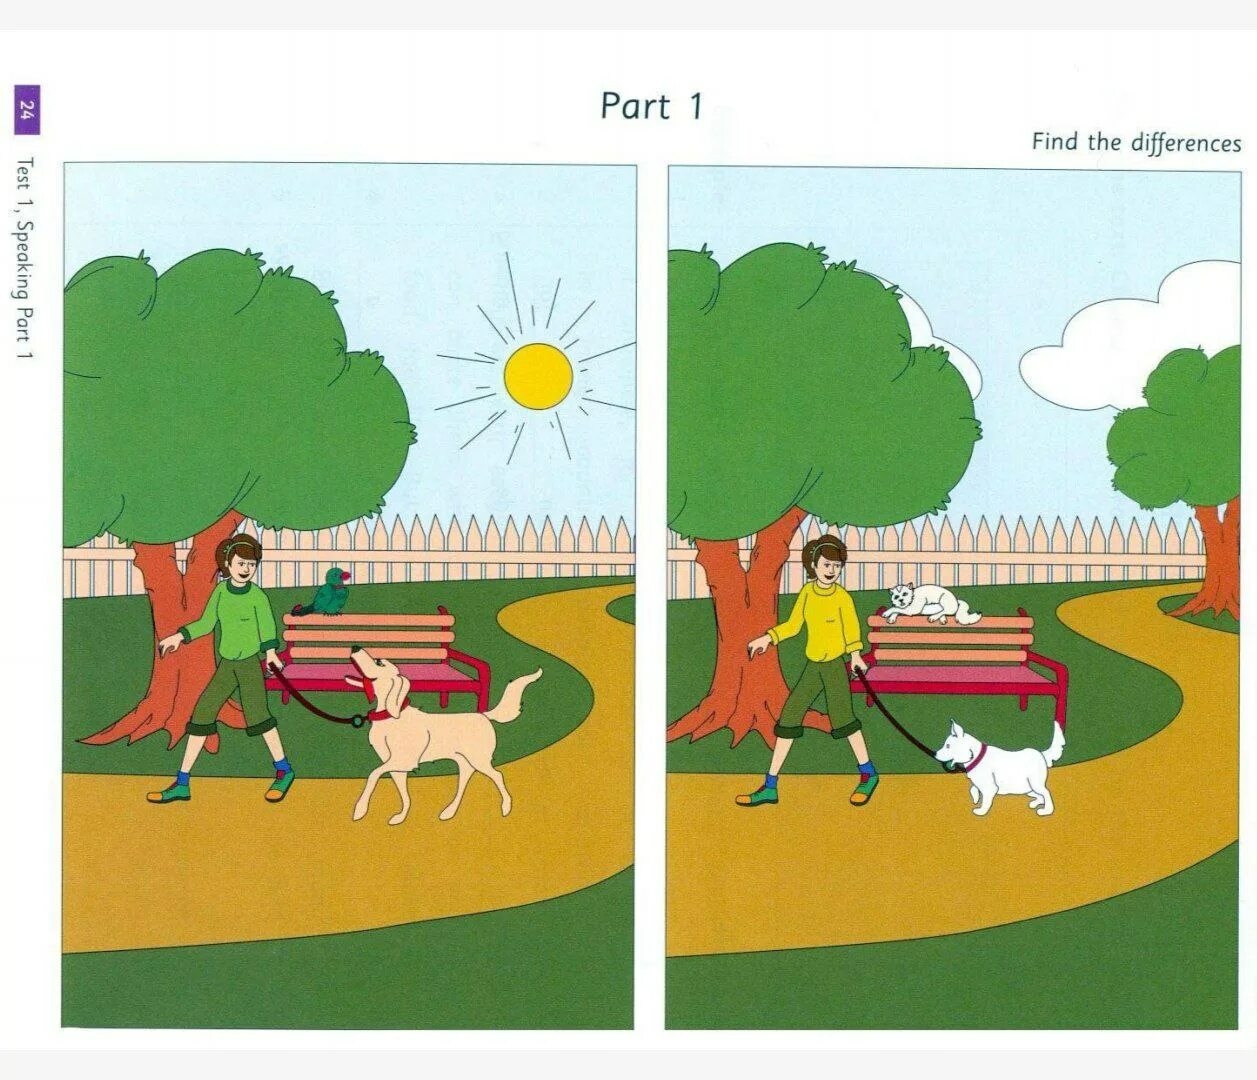 Отличия картинки. Рисунки с отличиями. Сравни картинки. Найти отличия на картинках на английском. Find the 3 different